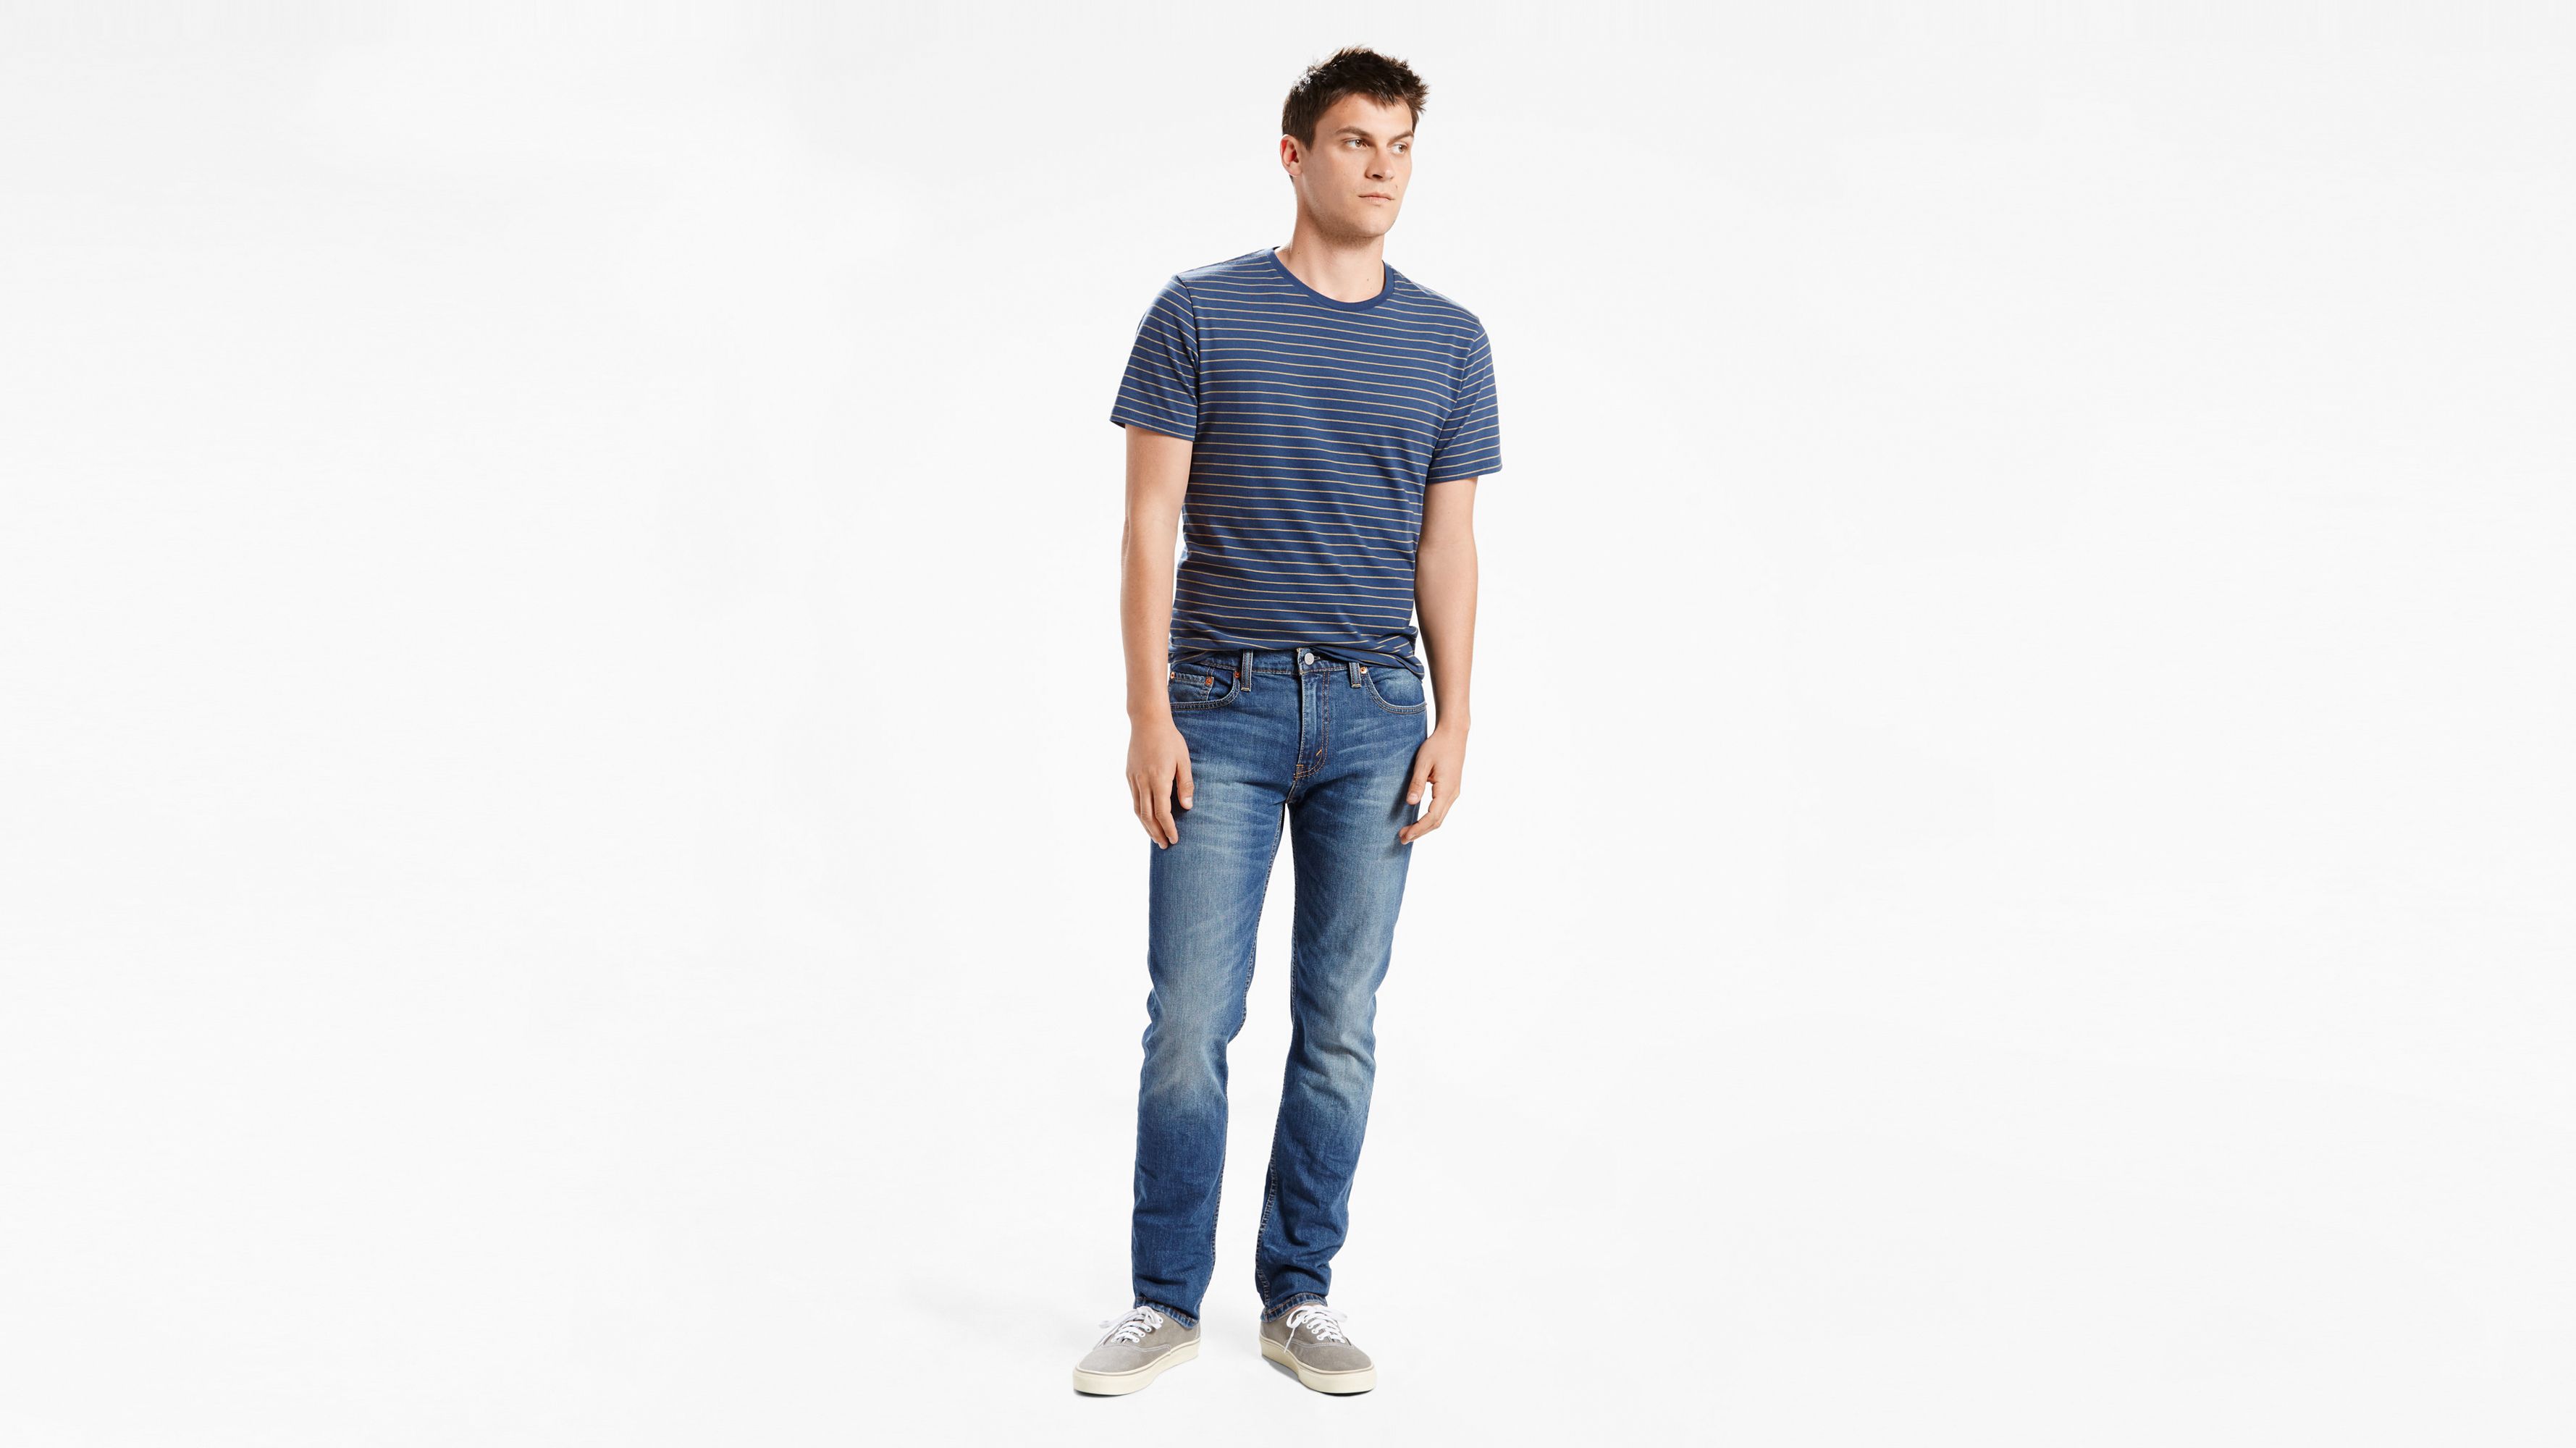 levi's men's 511 slim fit jeans stretch